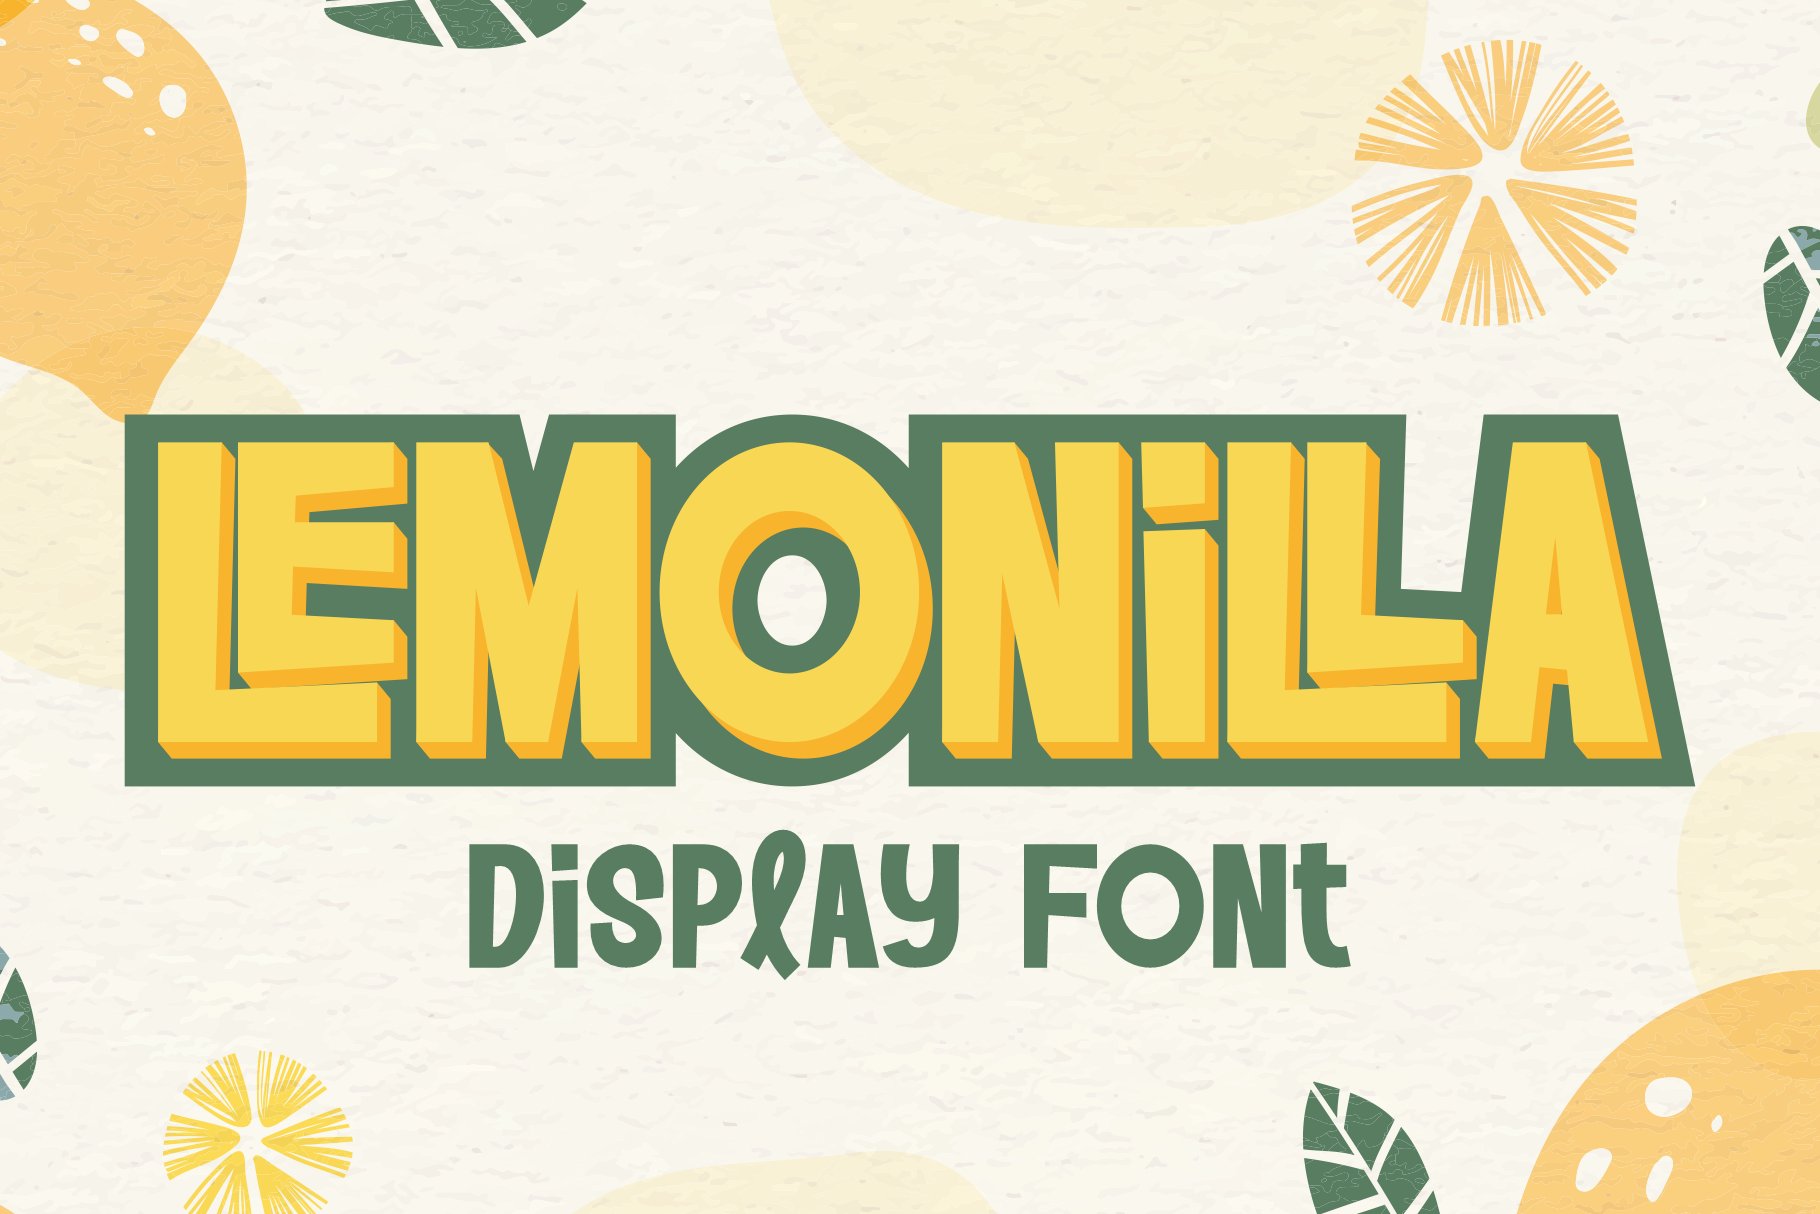 Lemonilla | Quirky Display Font cover image.